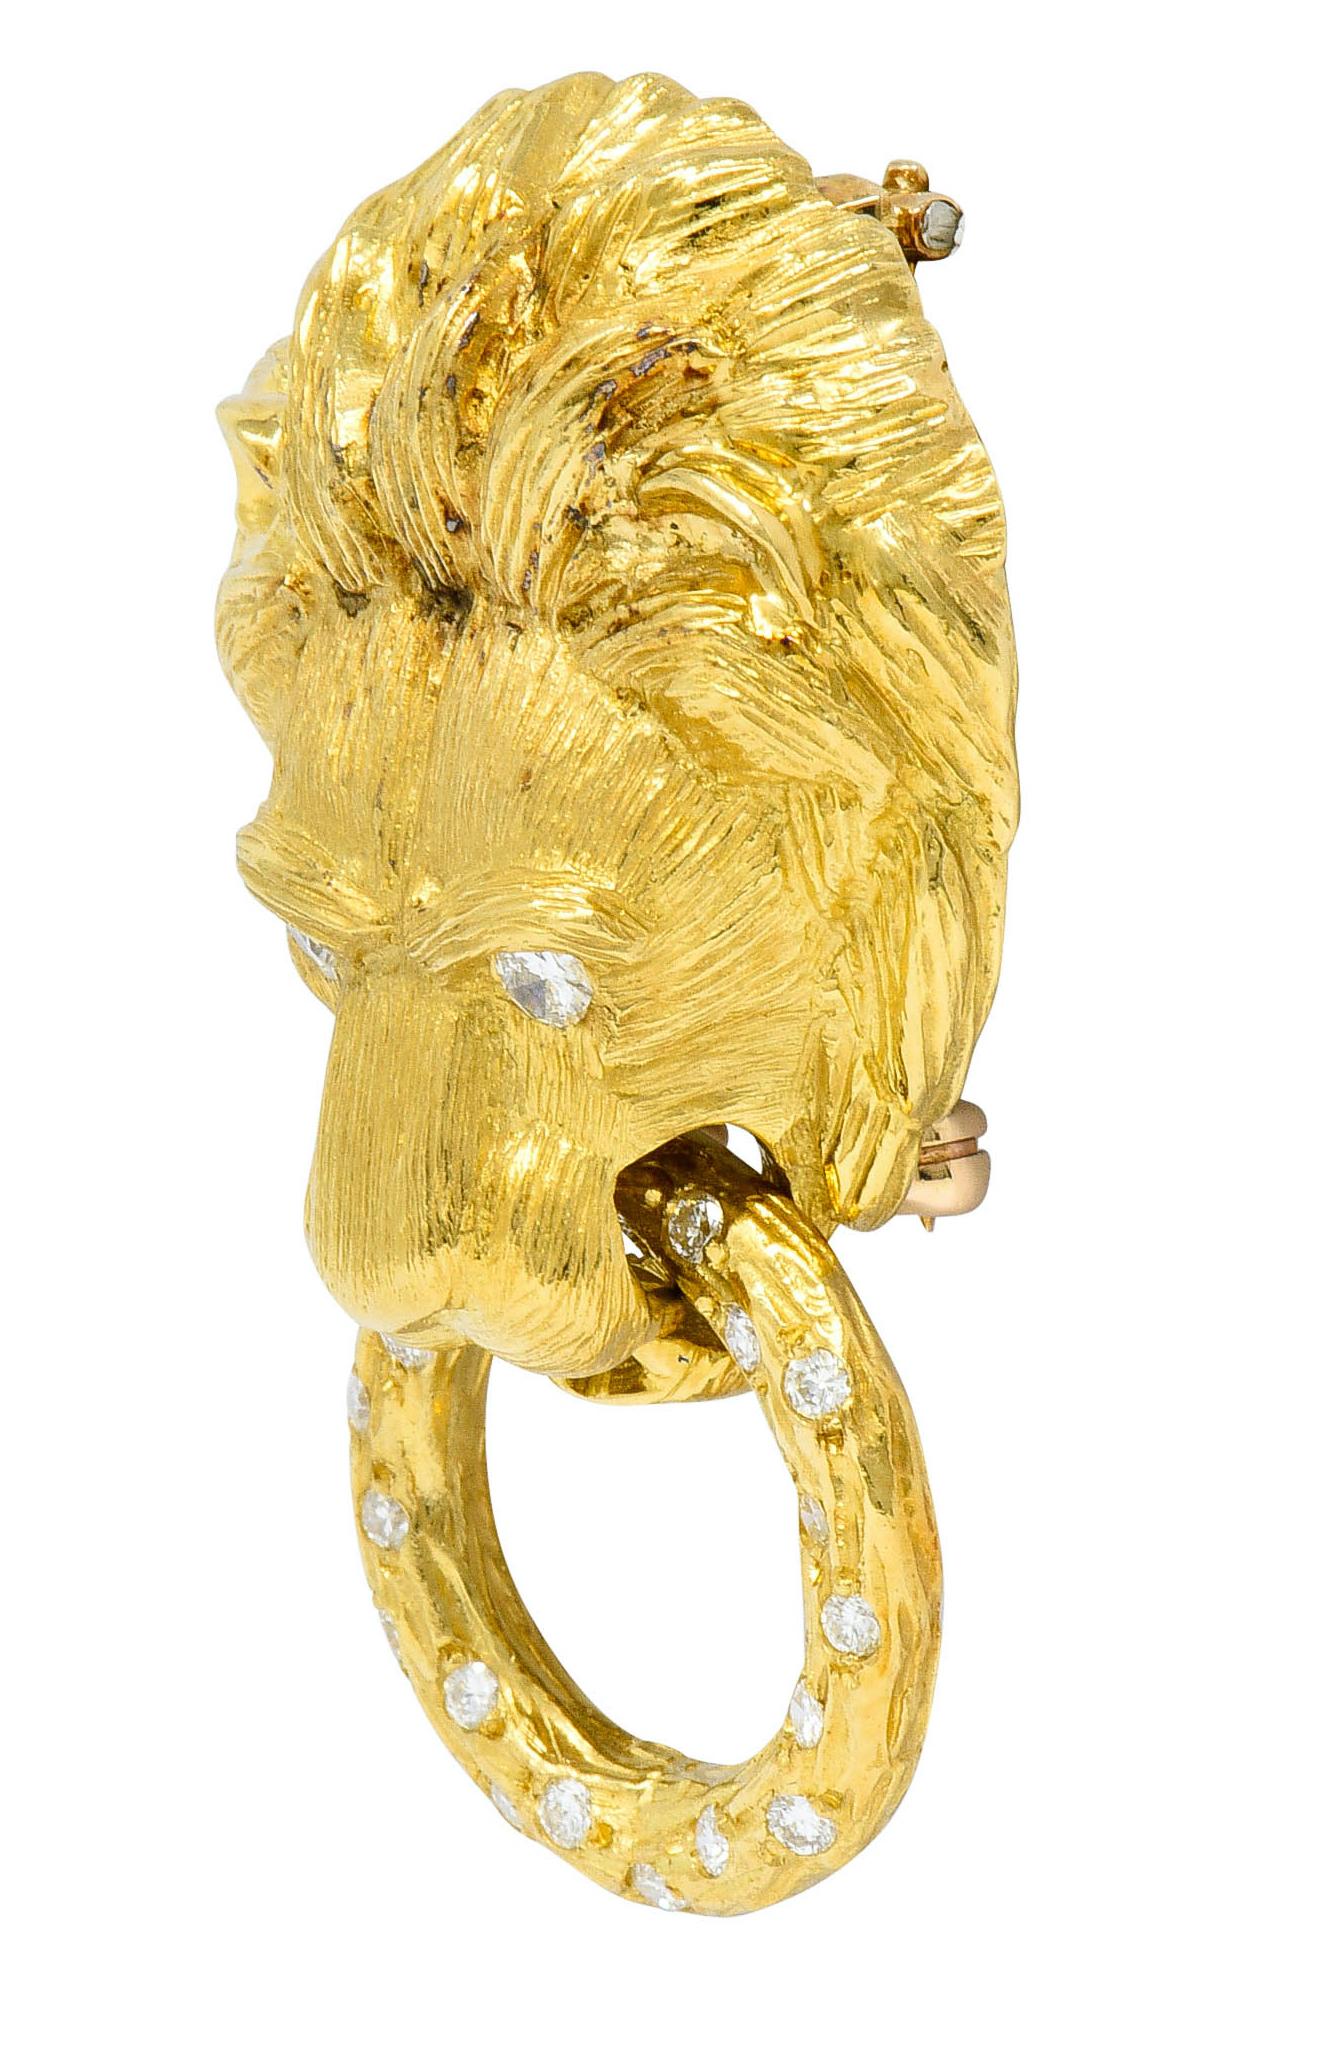 Brilliant Cut Van Cleef & Arpels Diamond 18 Karat Gold Lion Doorknocker Brooch